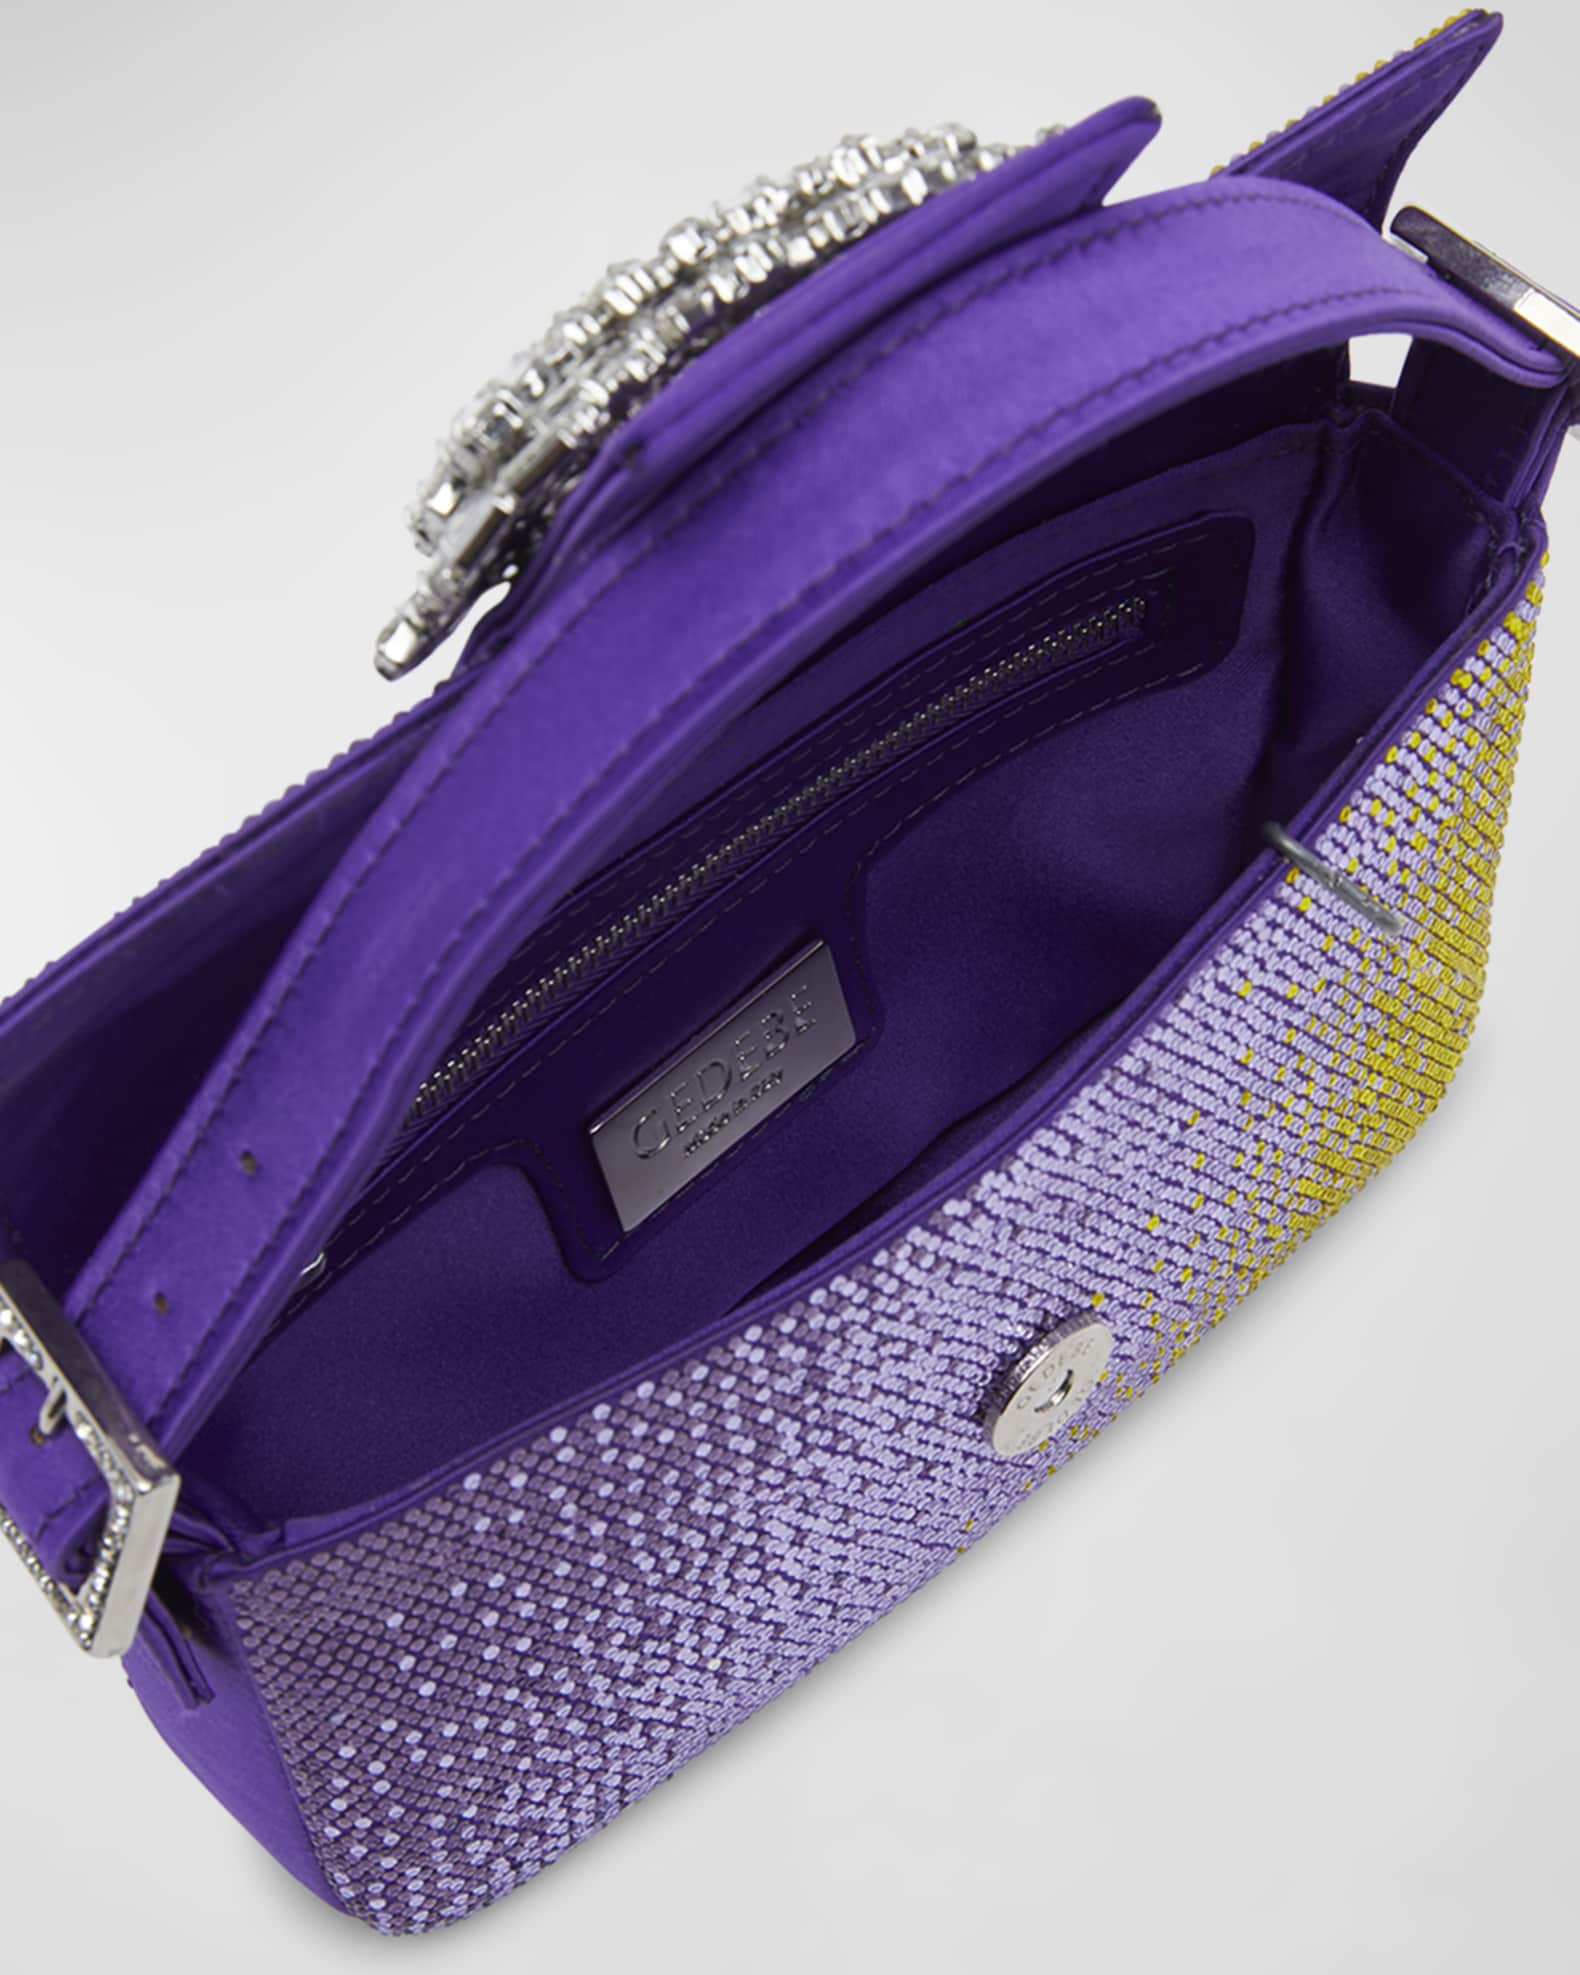 Gedebe Habibi Small Crystal Degrade Shoulder Bag | Neiman Marcus